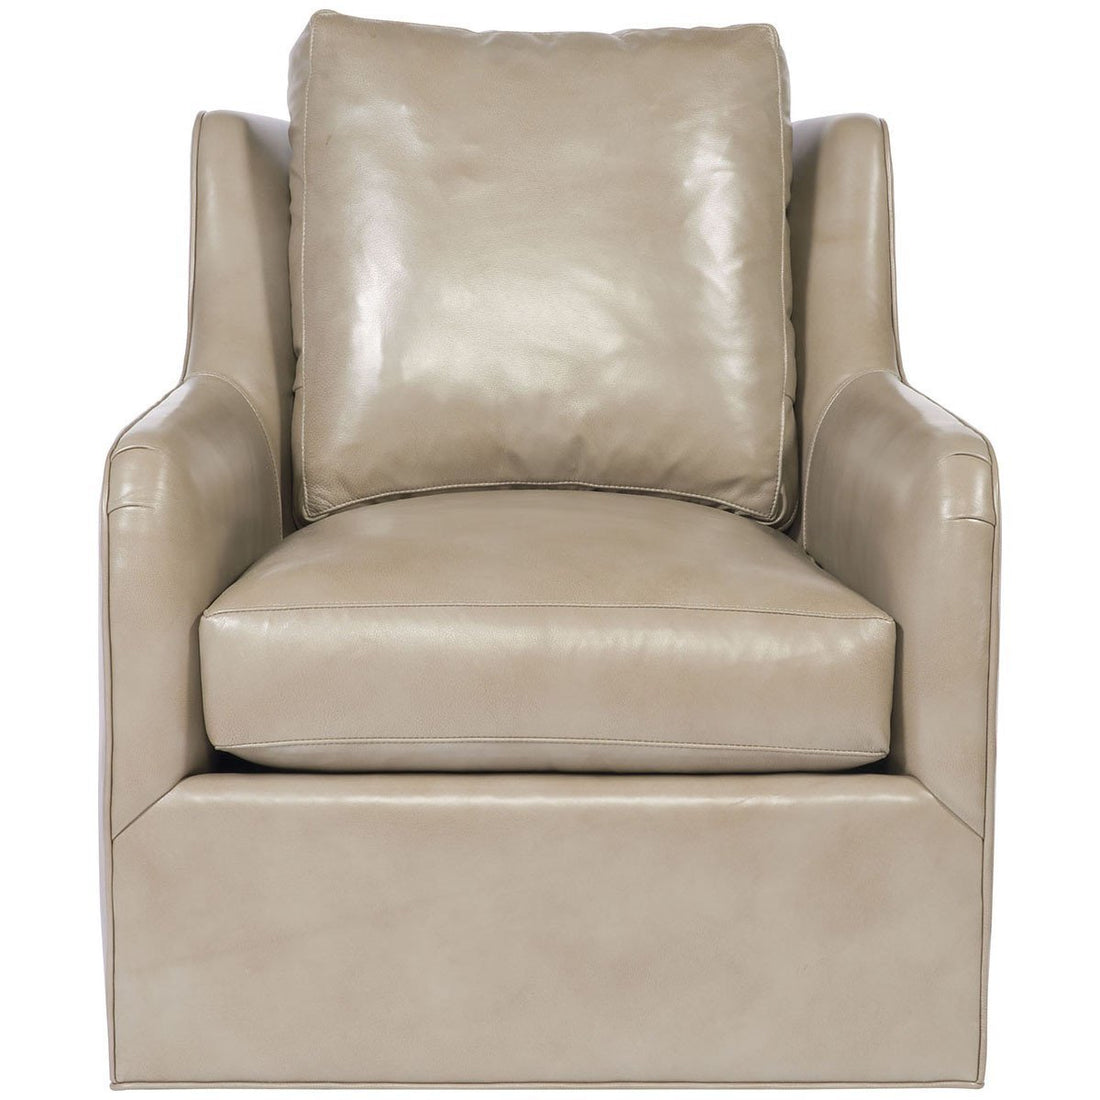 Vanguard Furniture Alfresco Pewter Fisher Swivel Chair